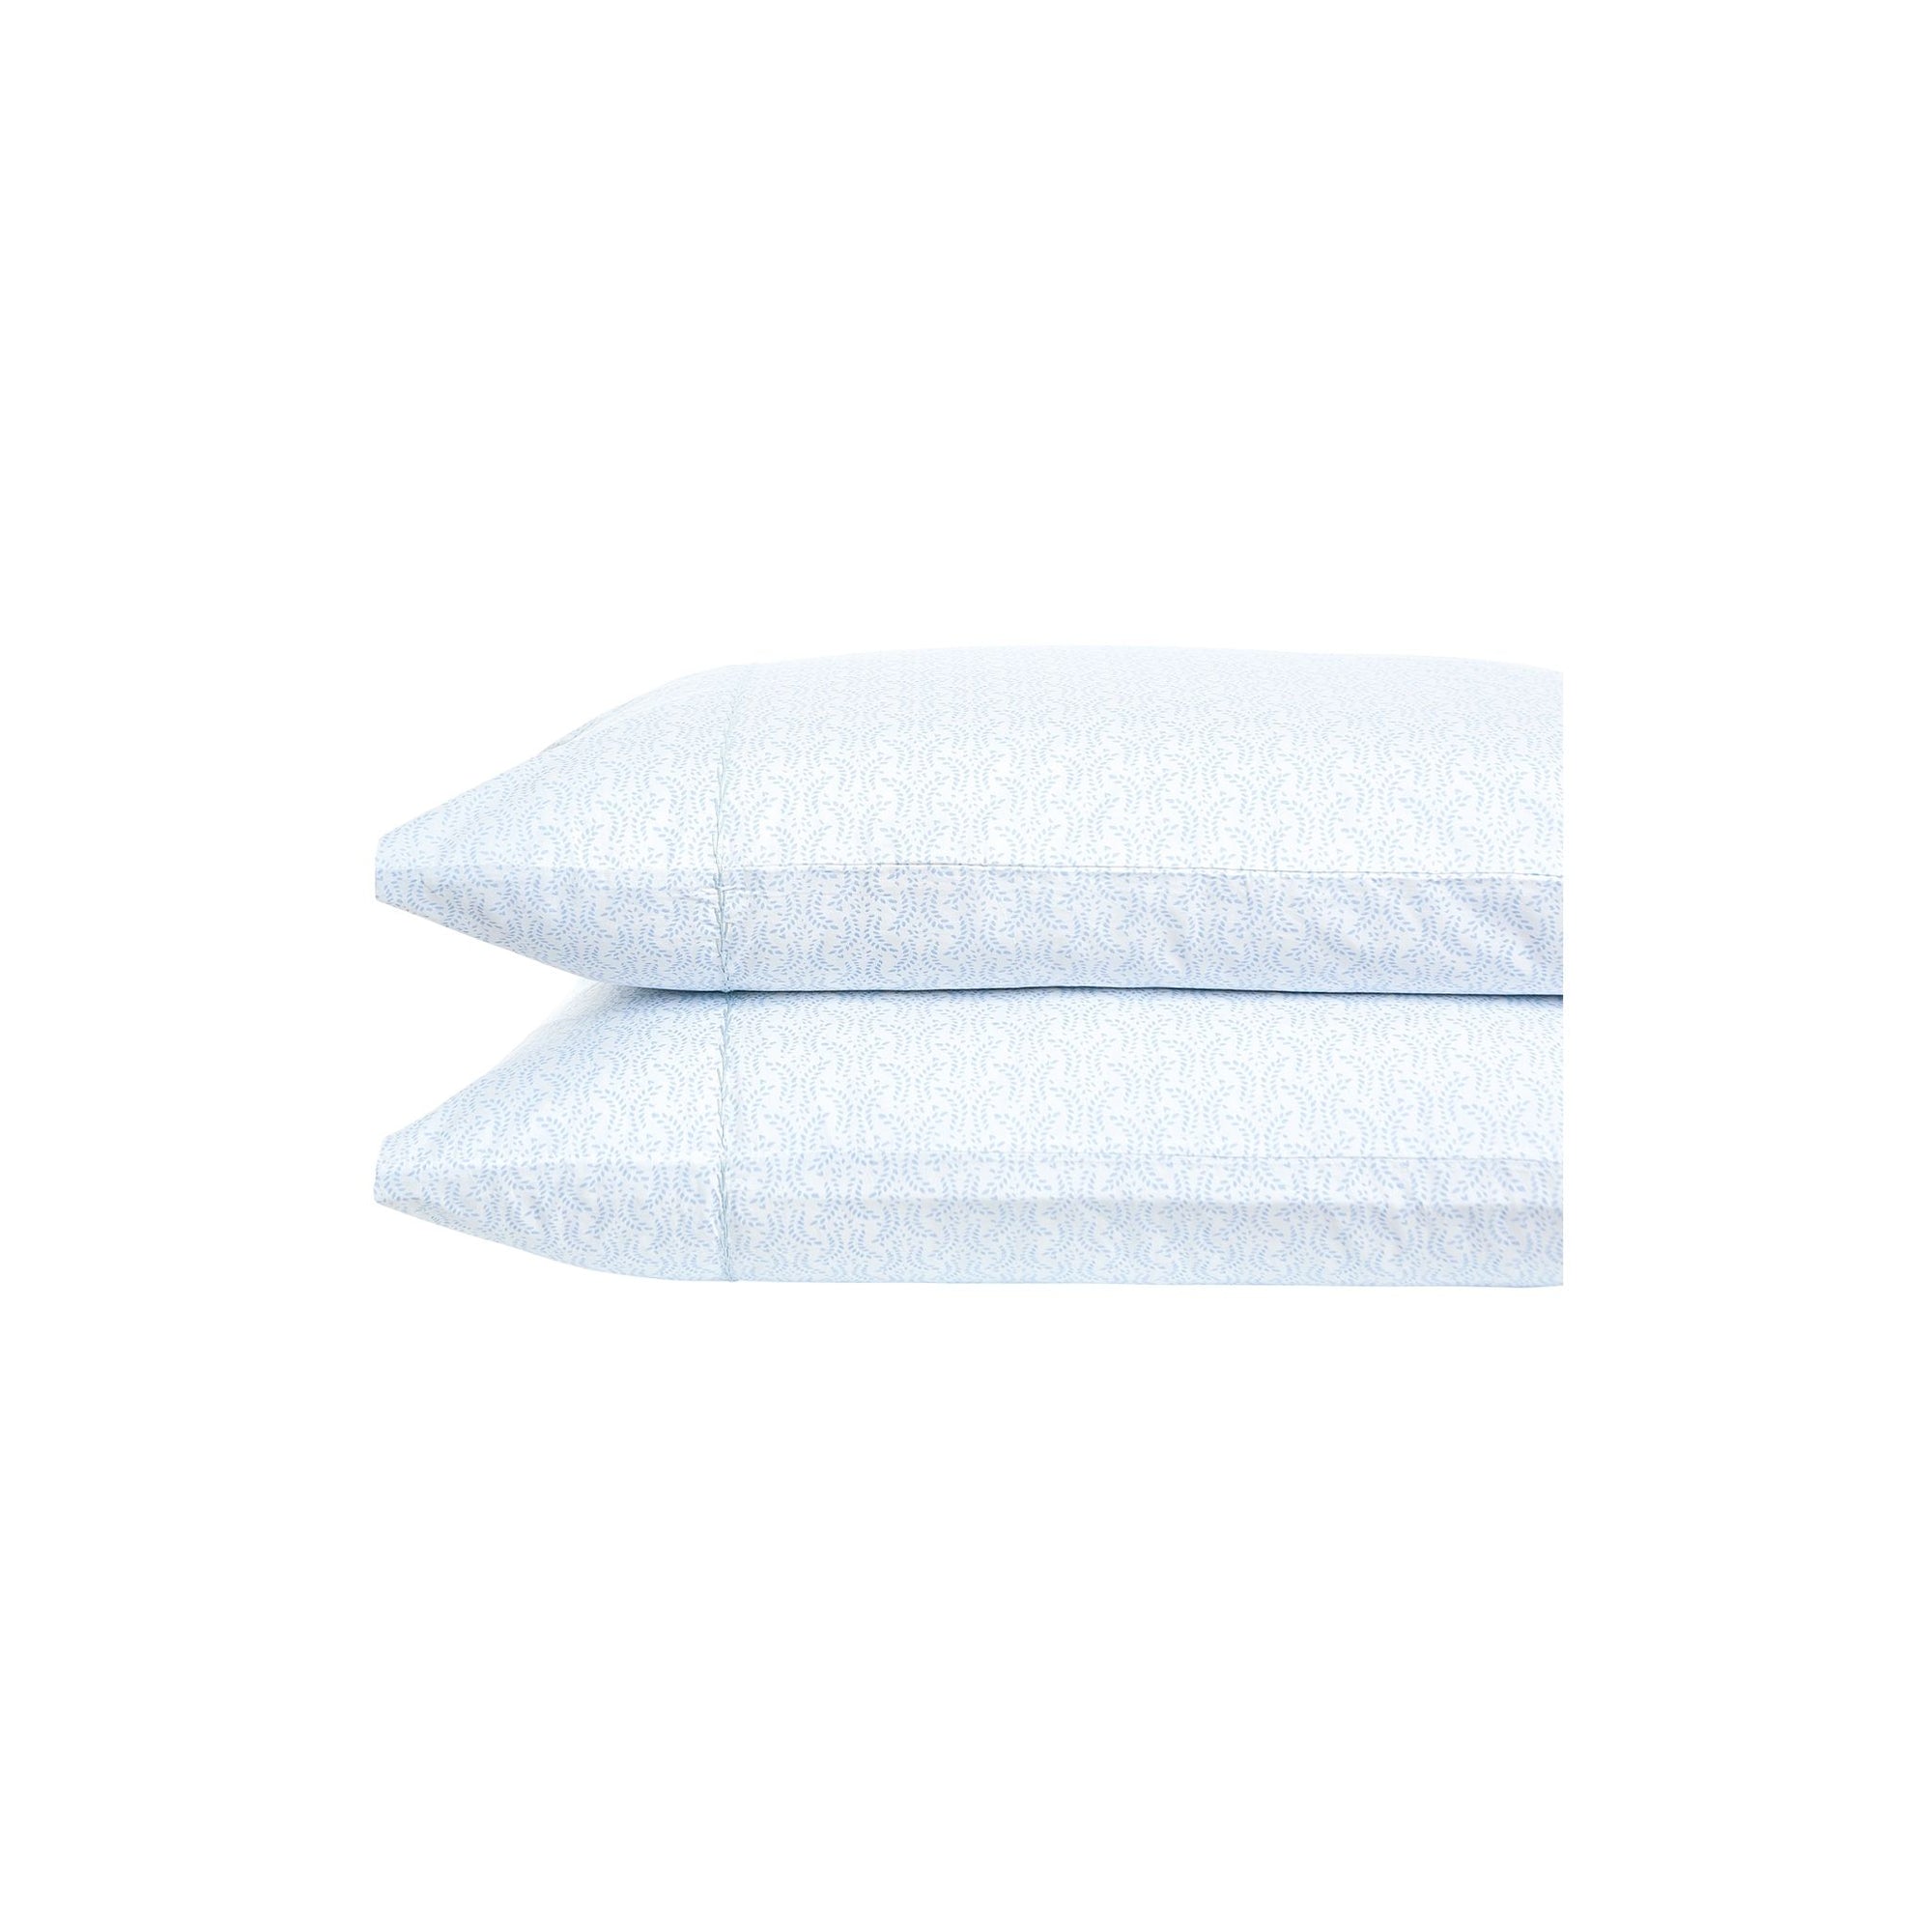 Ramra Standard Pillow Shams (Set of 2)